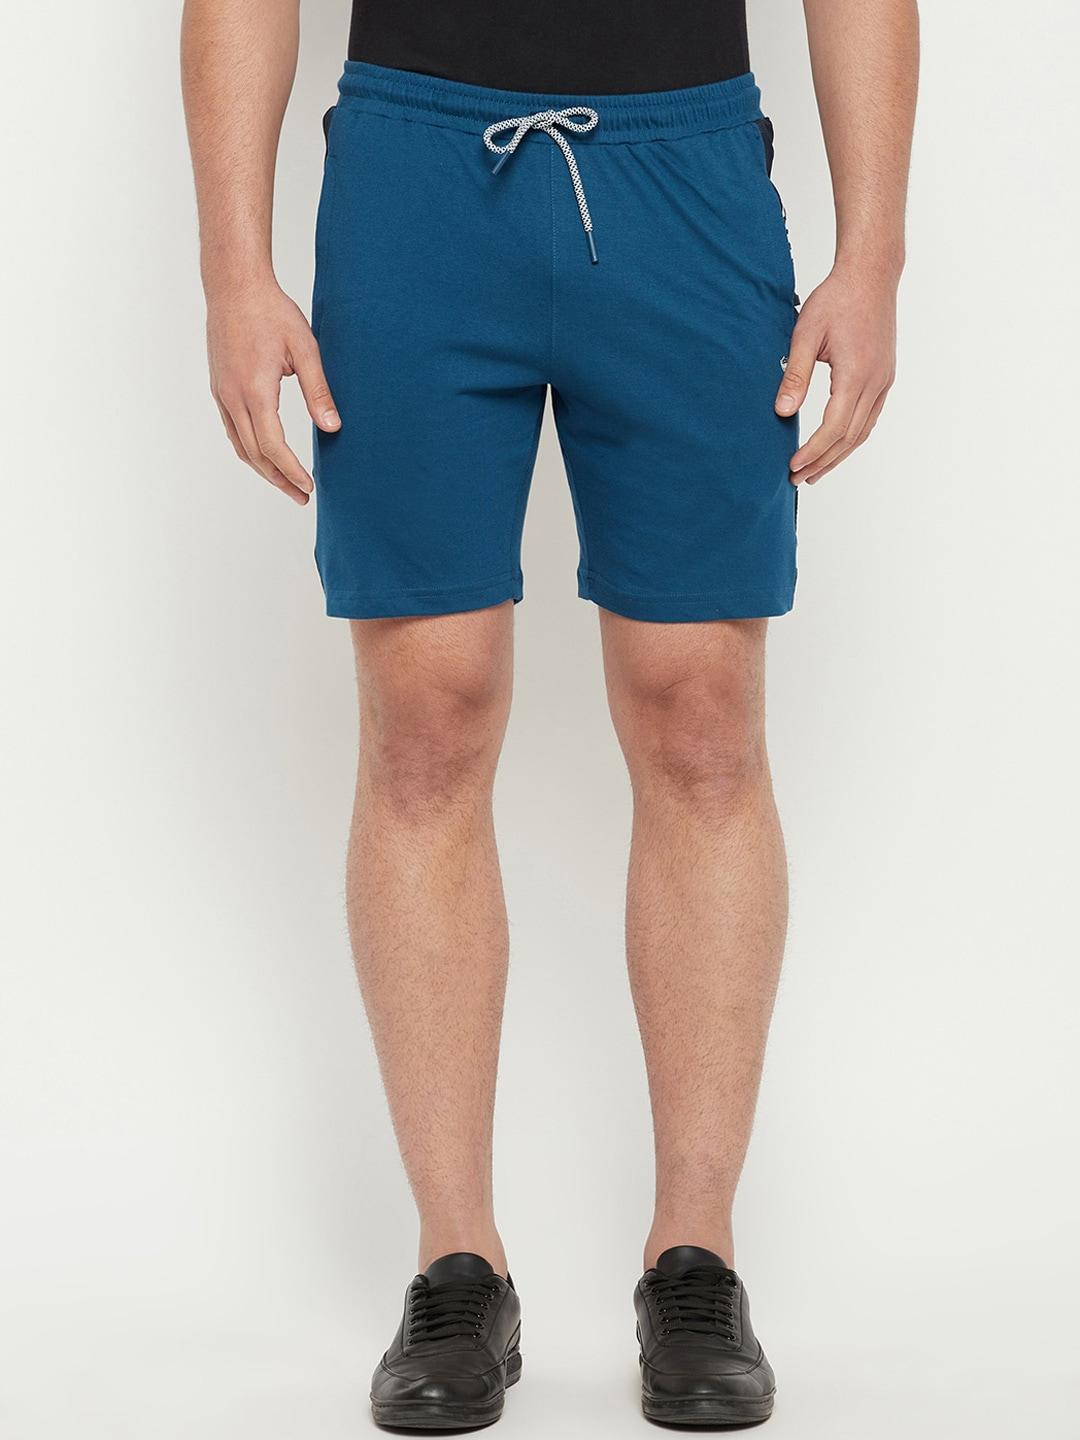 duke-men-typography-printed-training-or-gym-cotton-sports-shorts